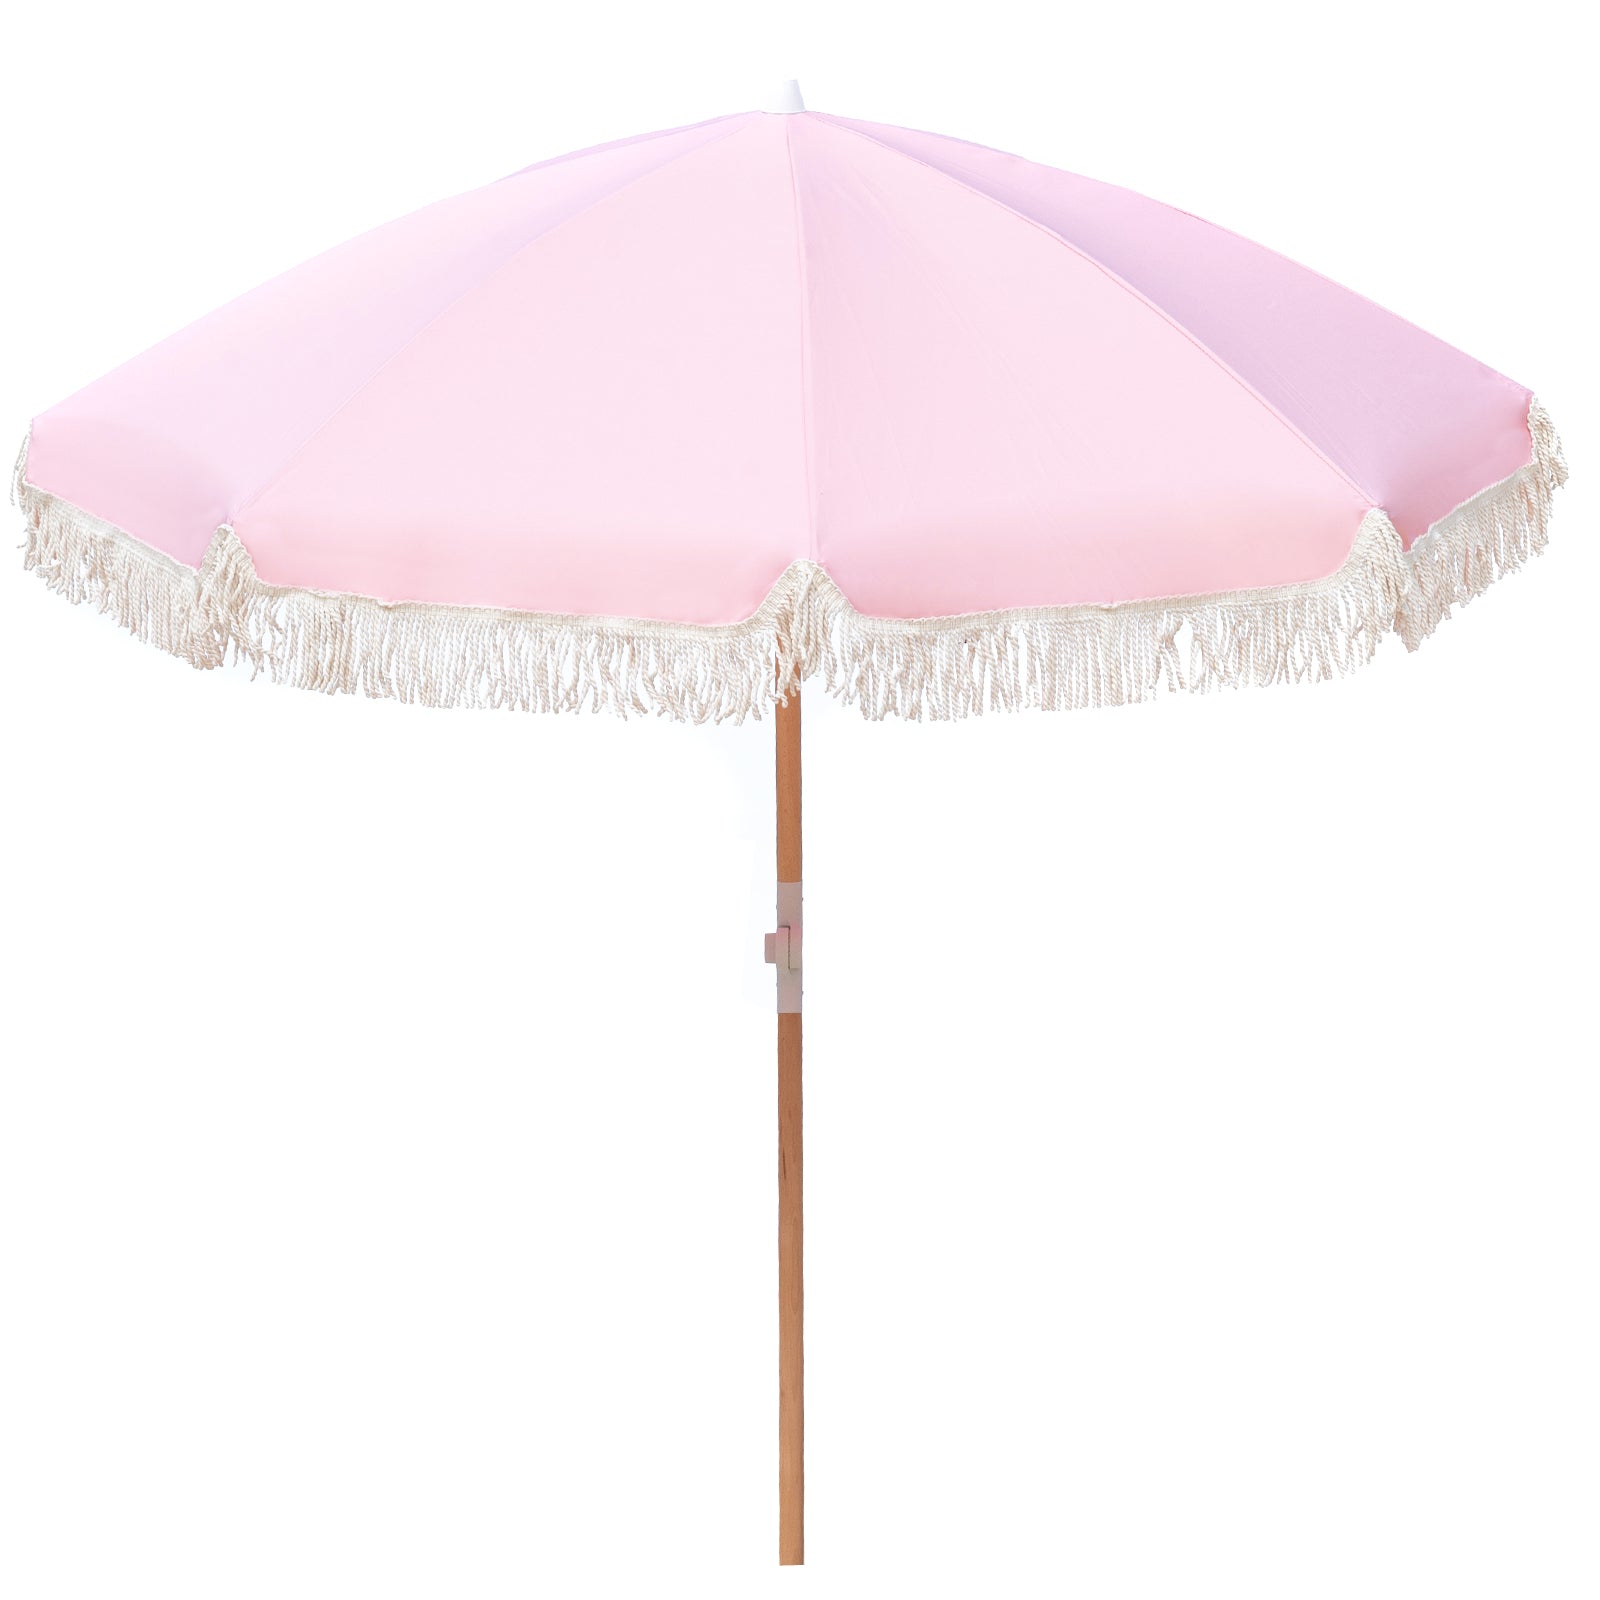 Havana Outdoors Beach Umbrella Portable 2 Metre Fringed Garden Sun Shade Shelter - Dusty Rose